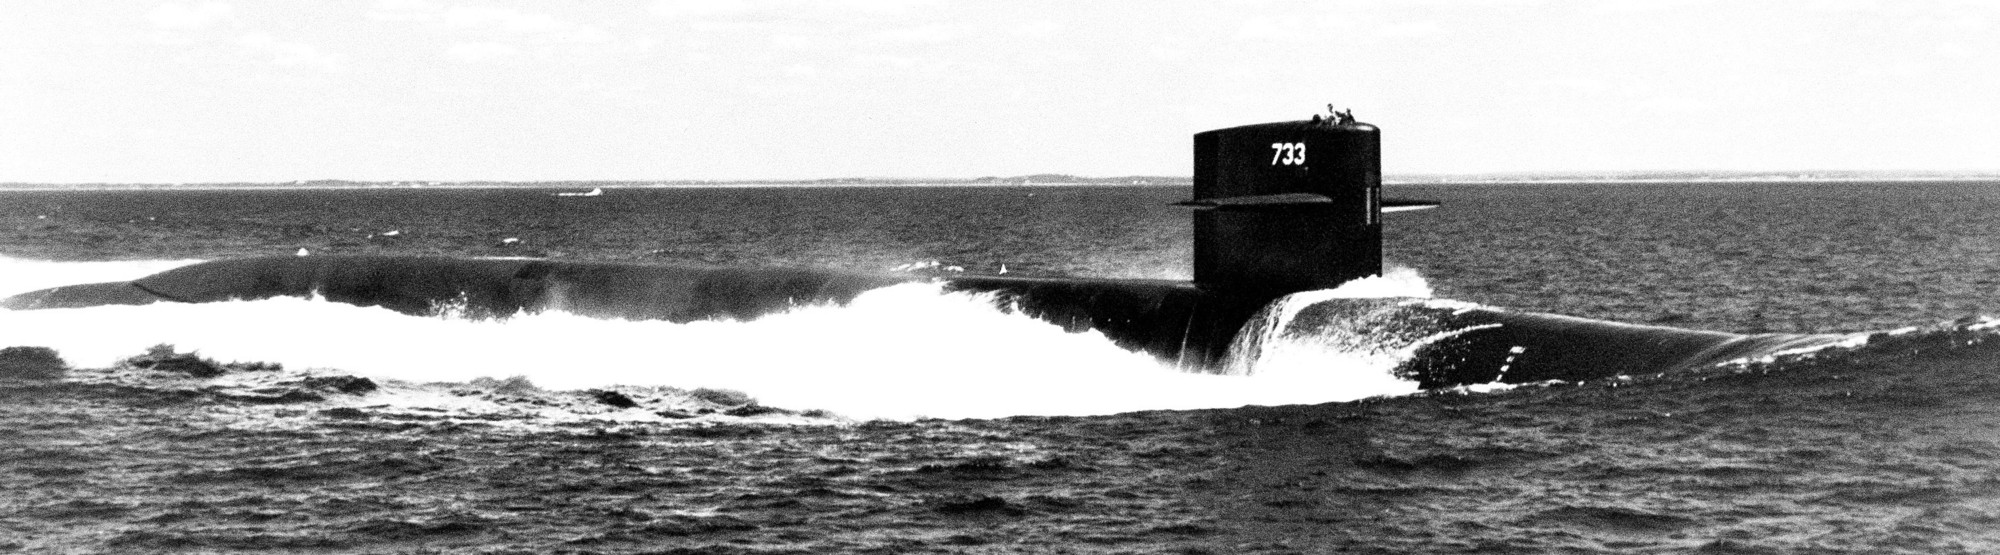 ssbn-733 uss nevada ohio class ballistic missile submarine 1986 19